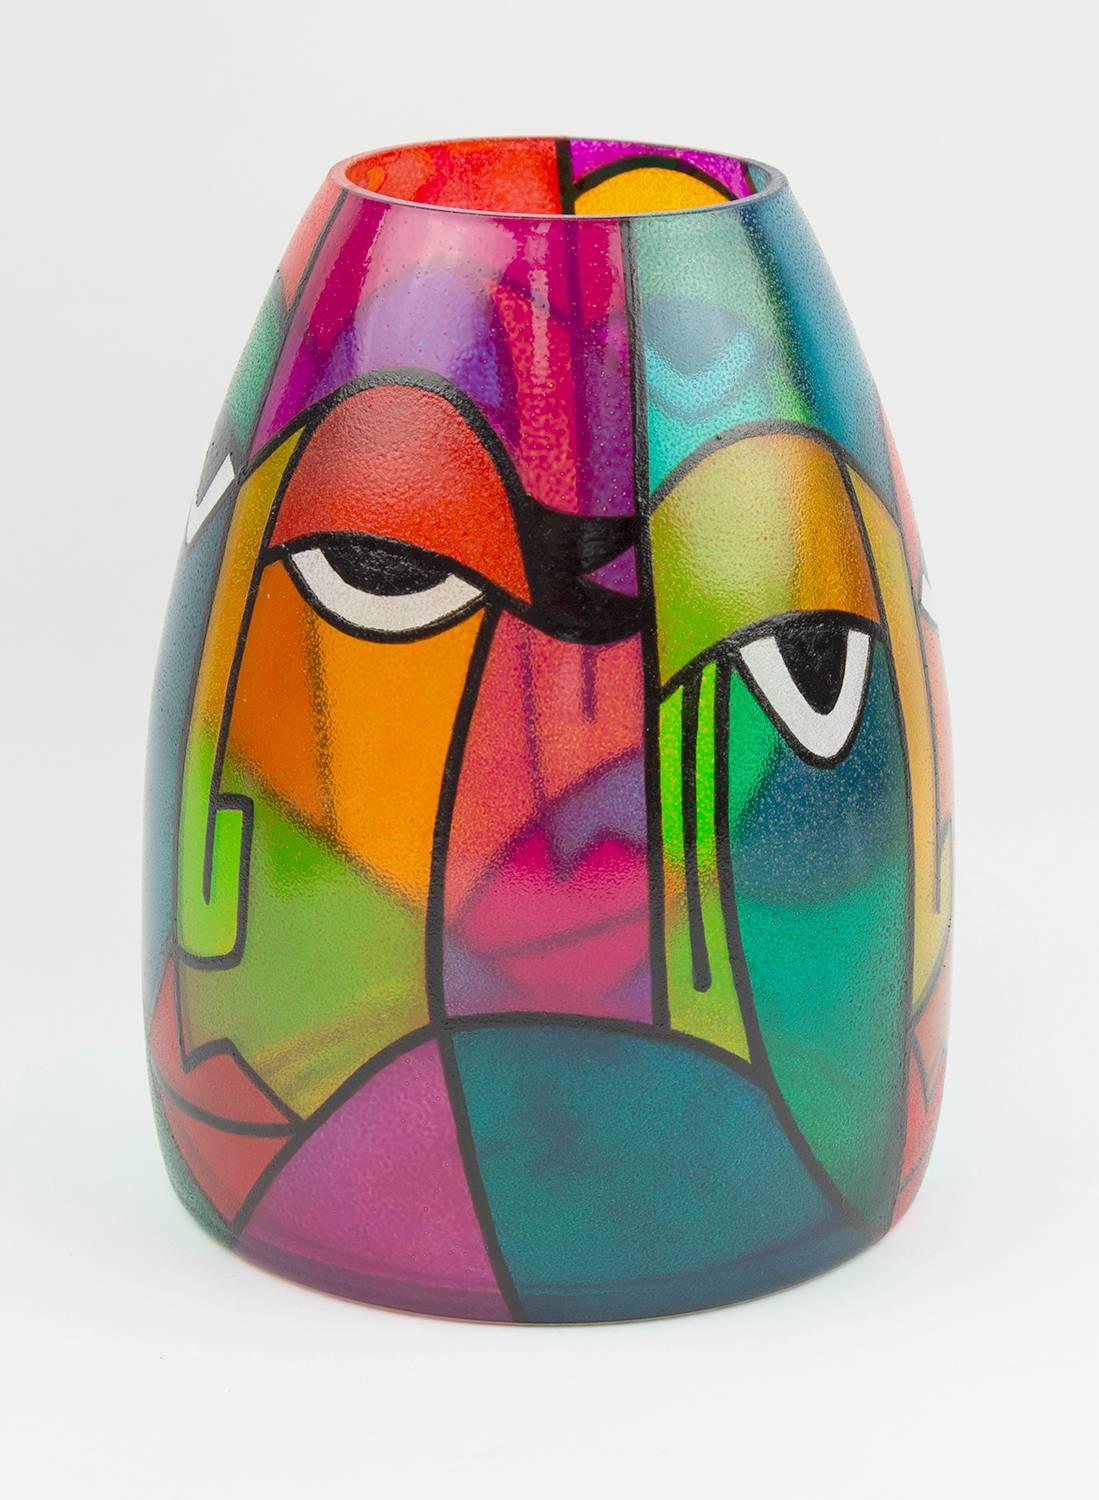 picasso style vase